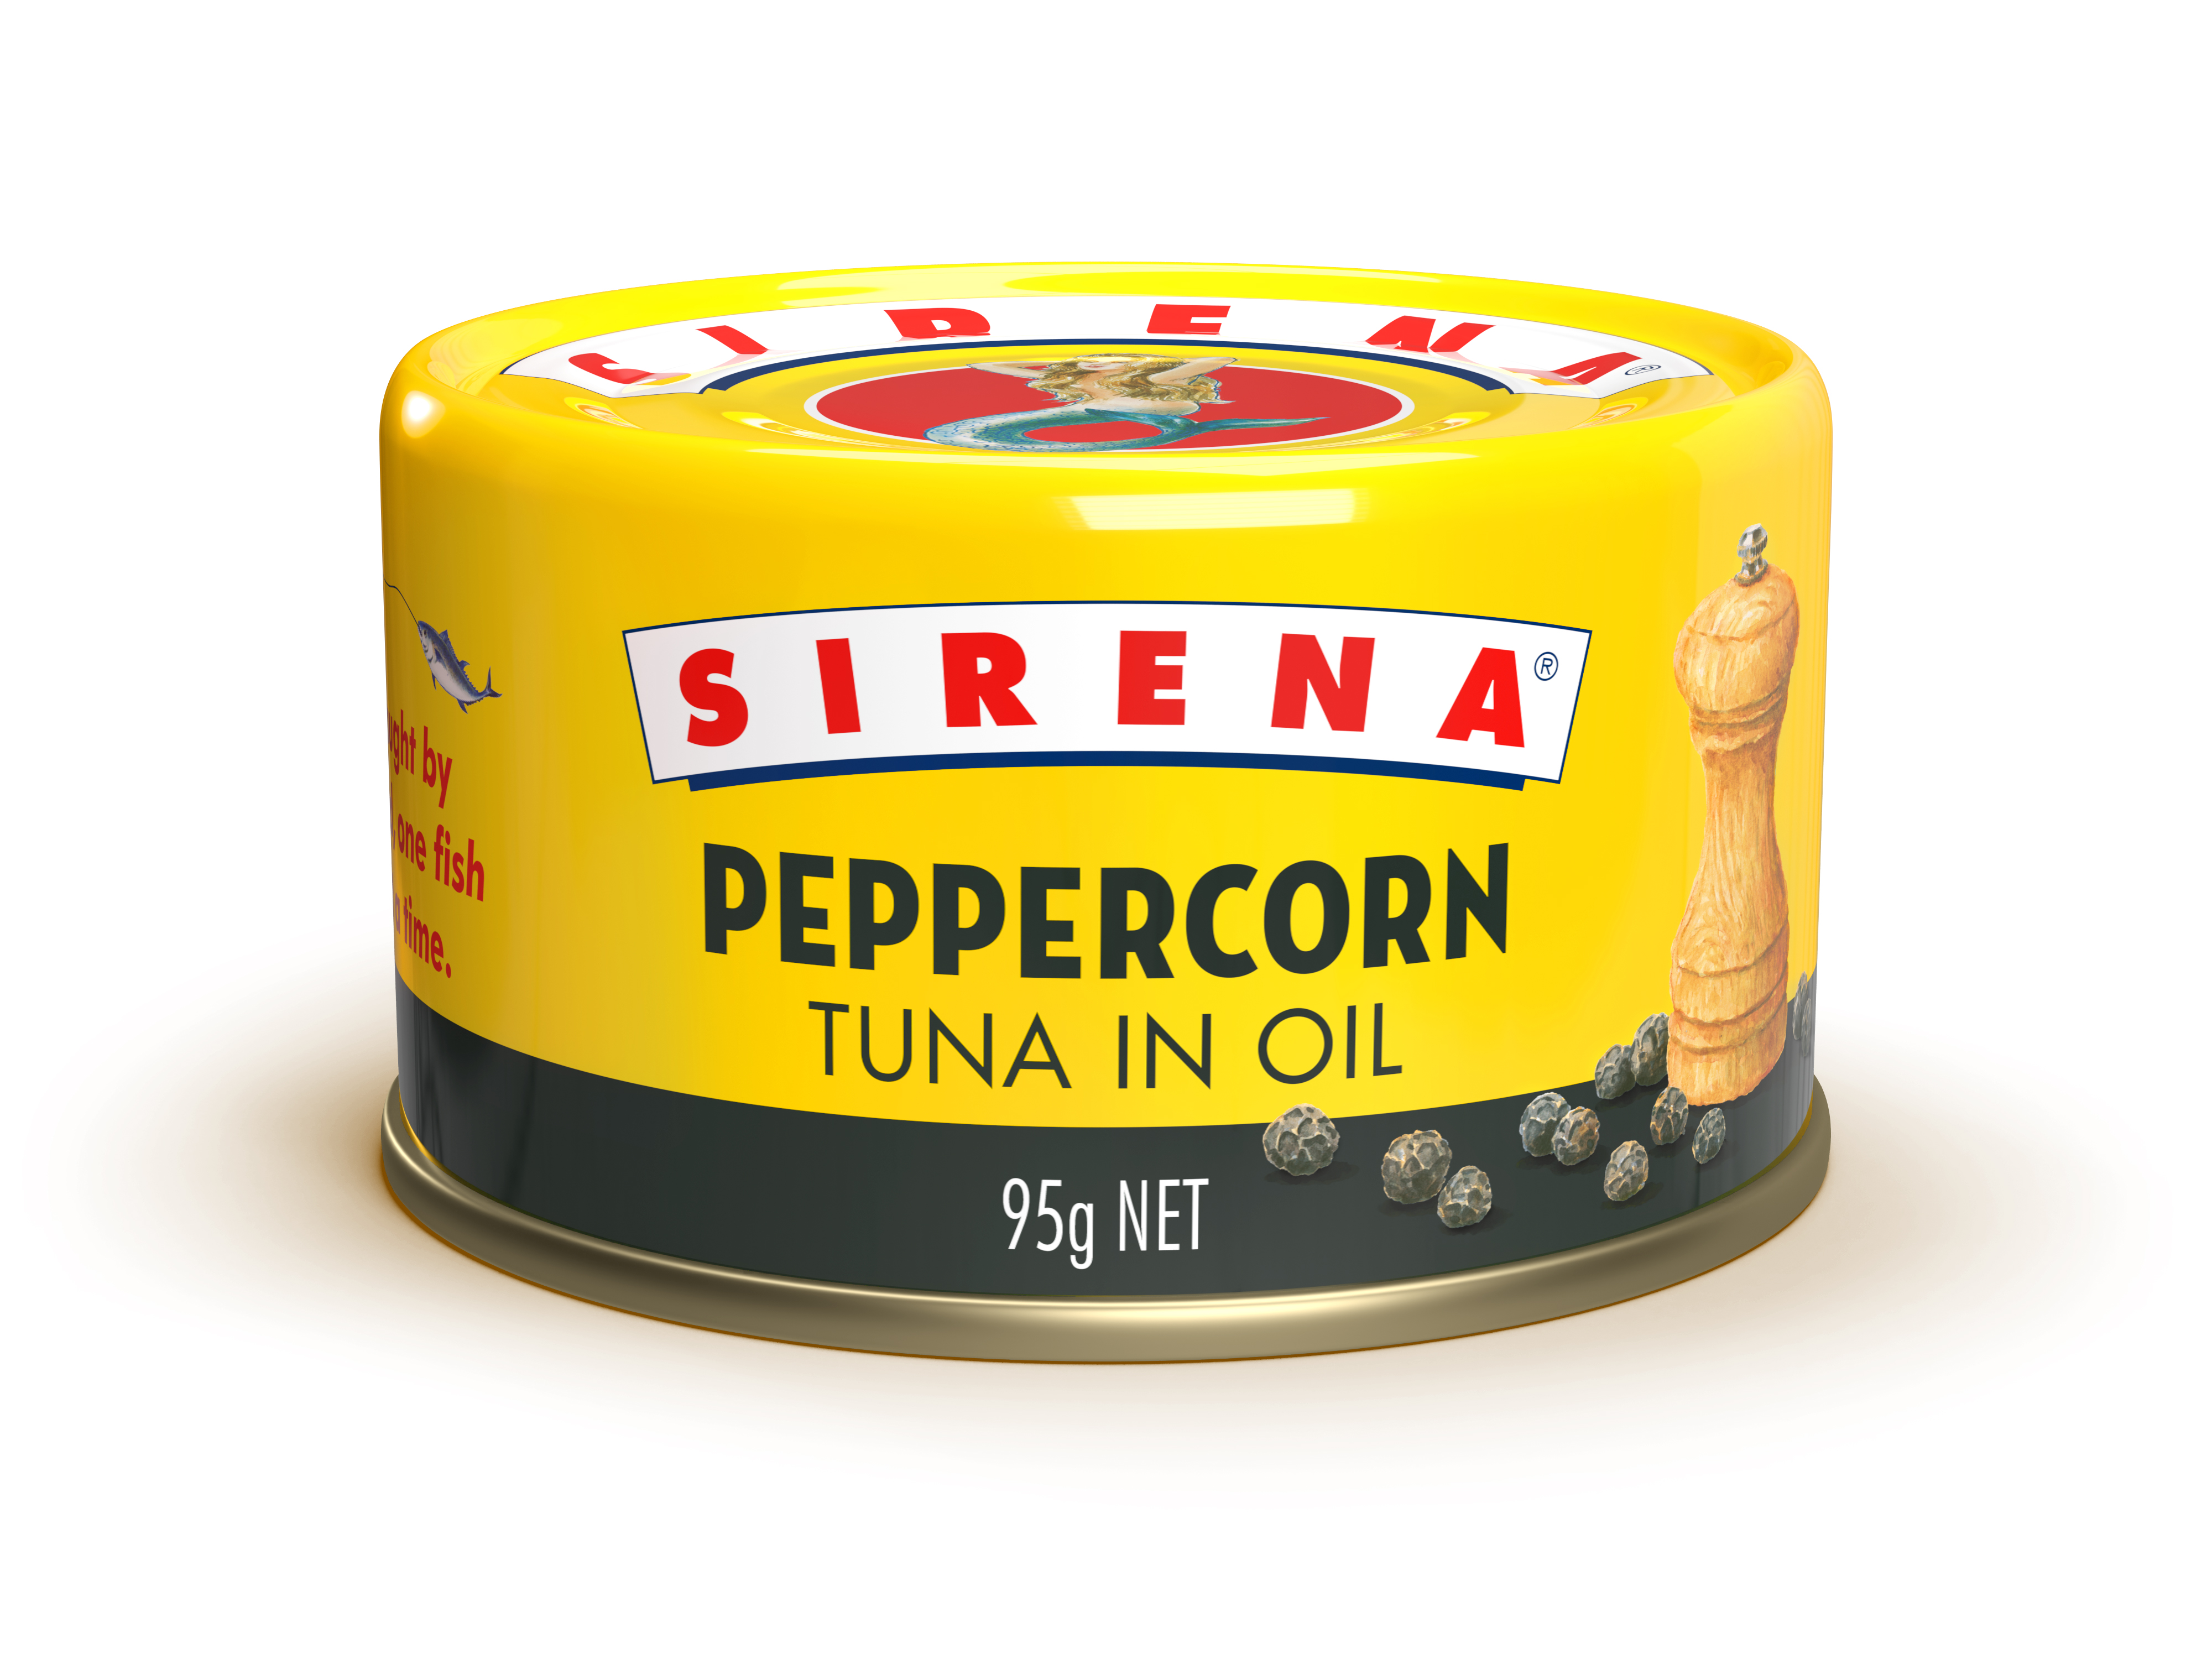 Sirena peppercorn